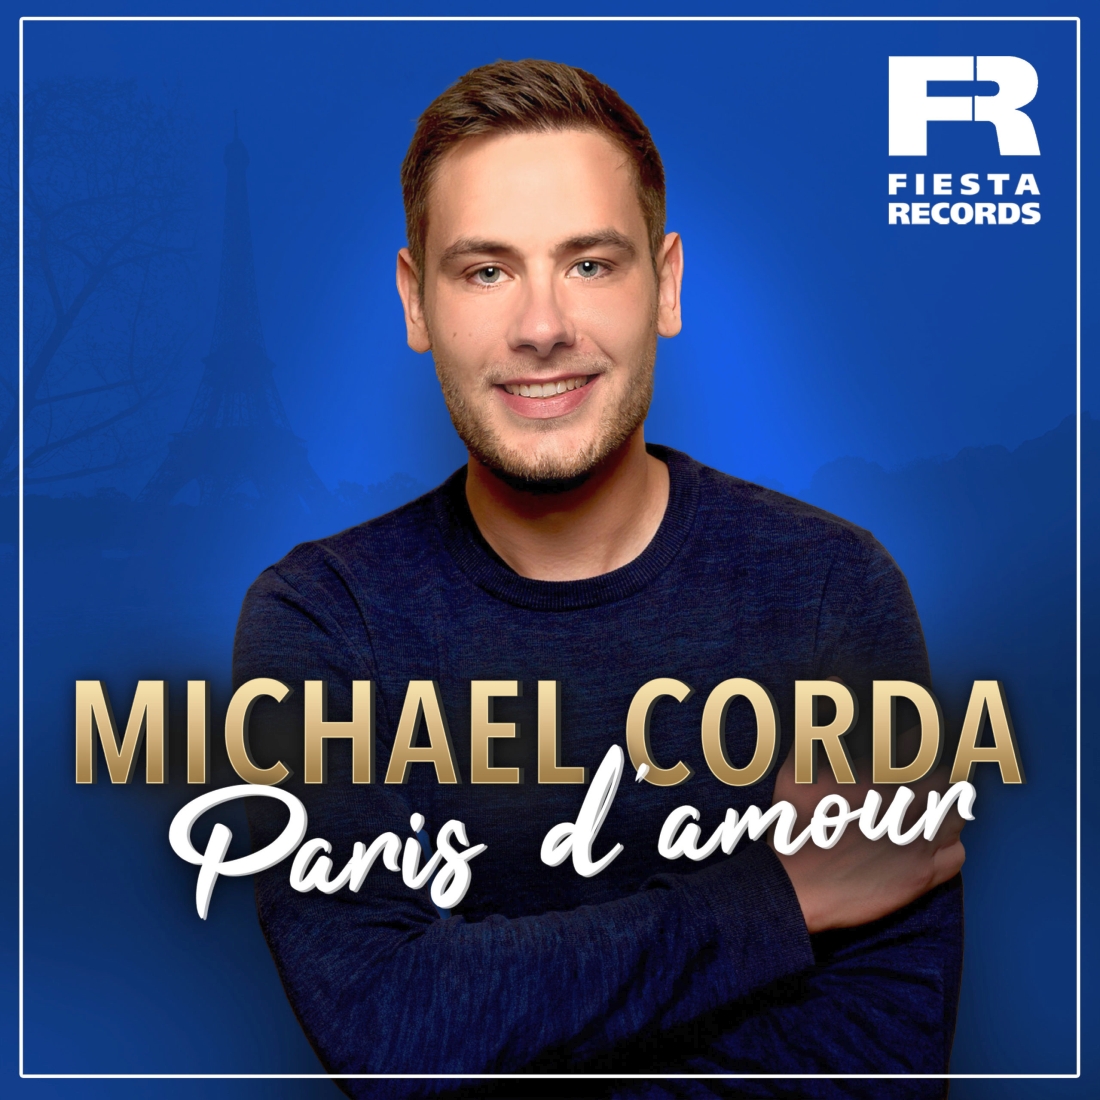 Michael Corda - Paris d'amour (Fiesta Records)